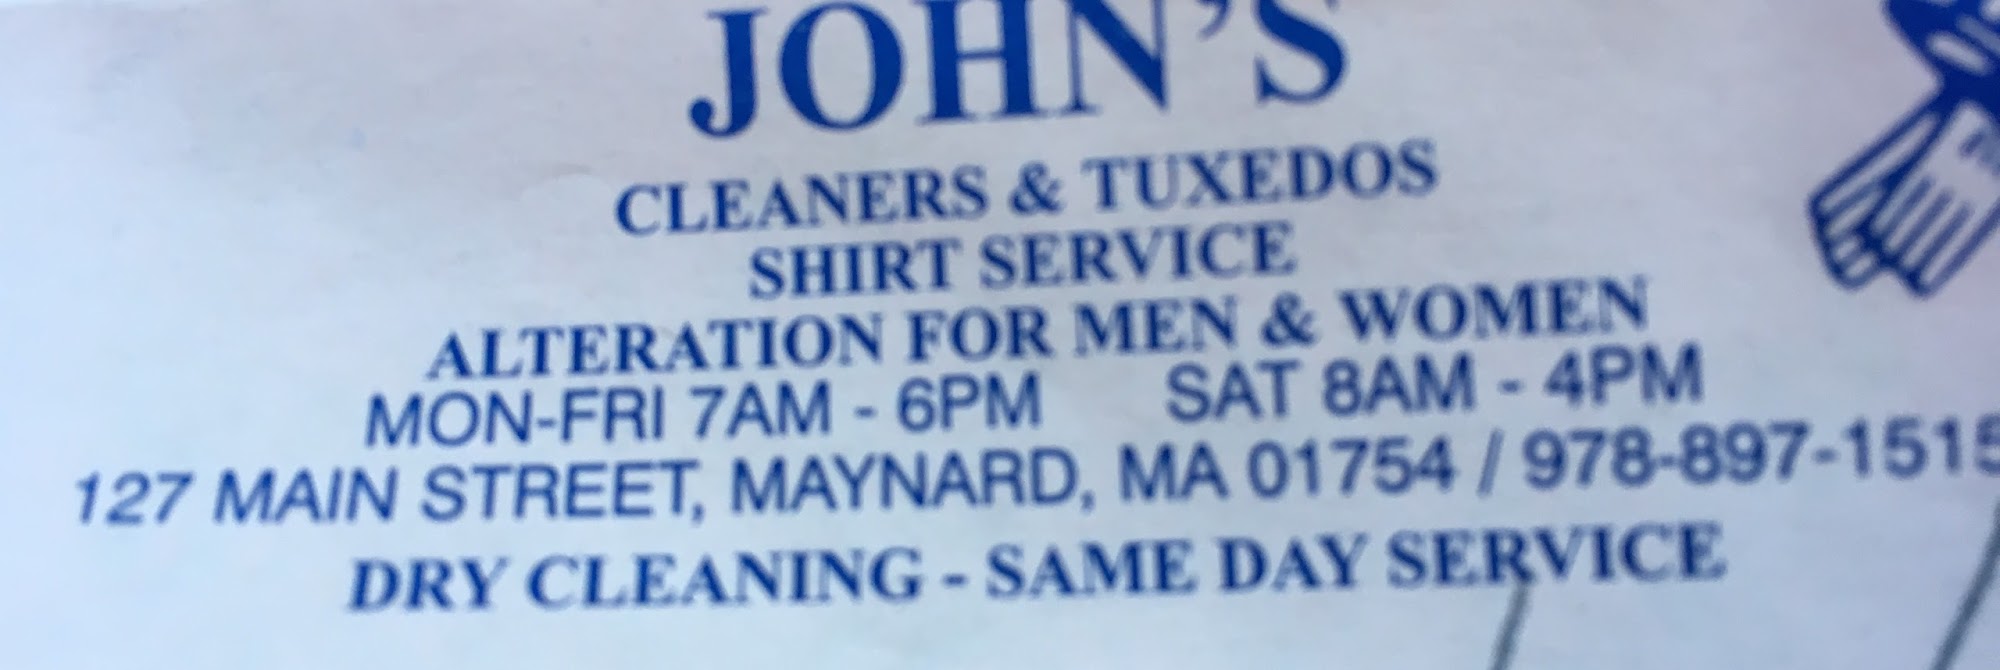 John's Cleaners & Tuxedos 127 Main St, Maynard Massachusetts 01754